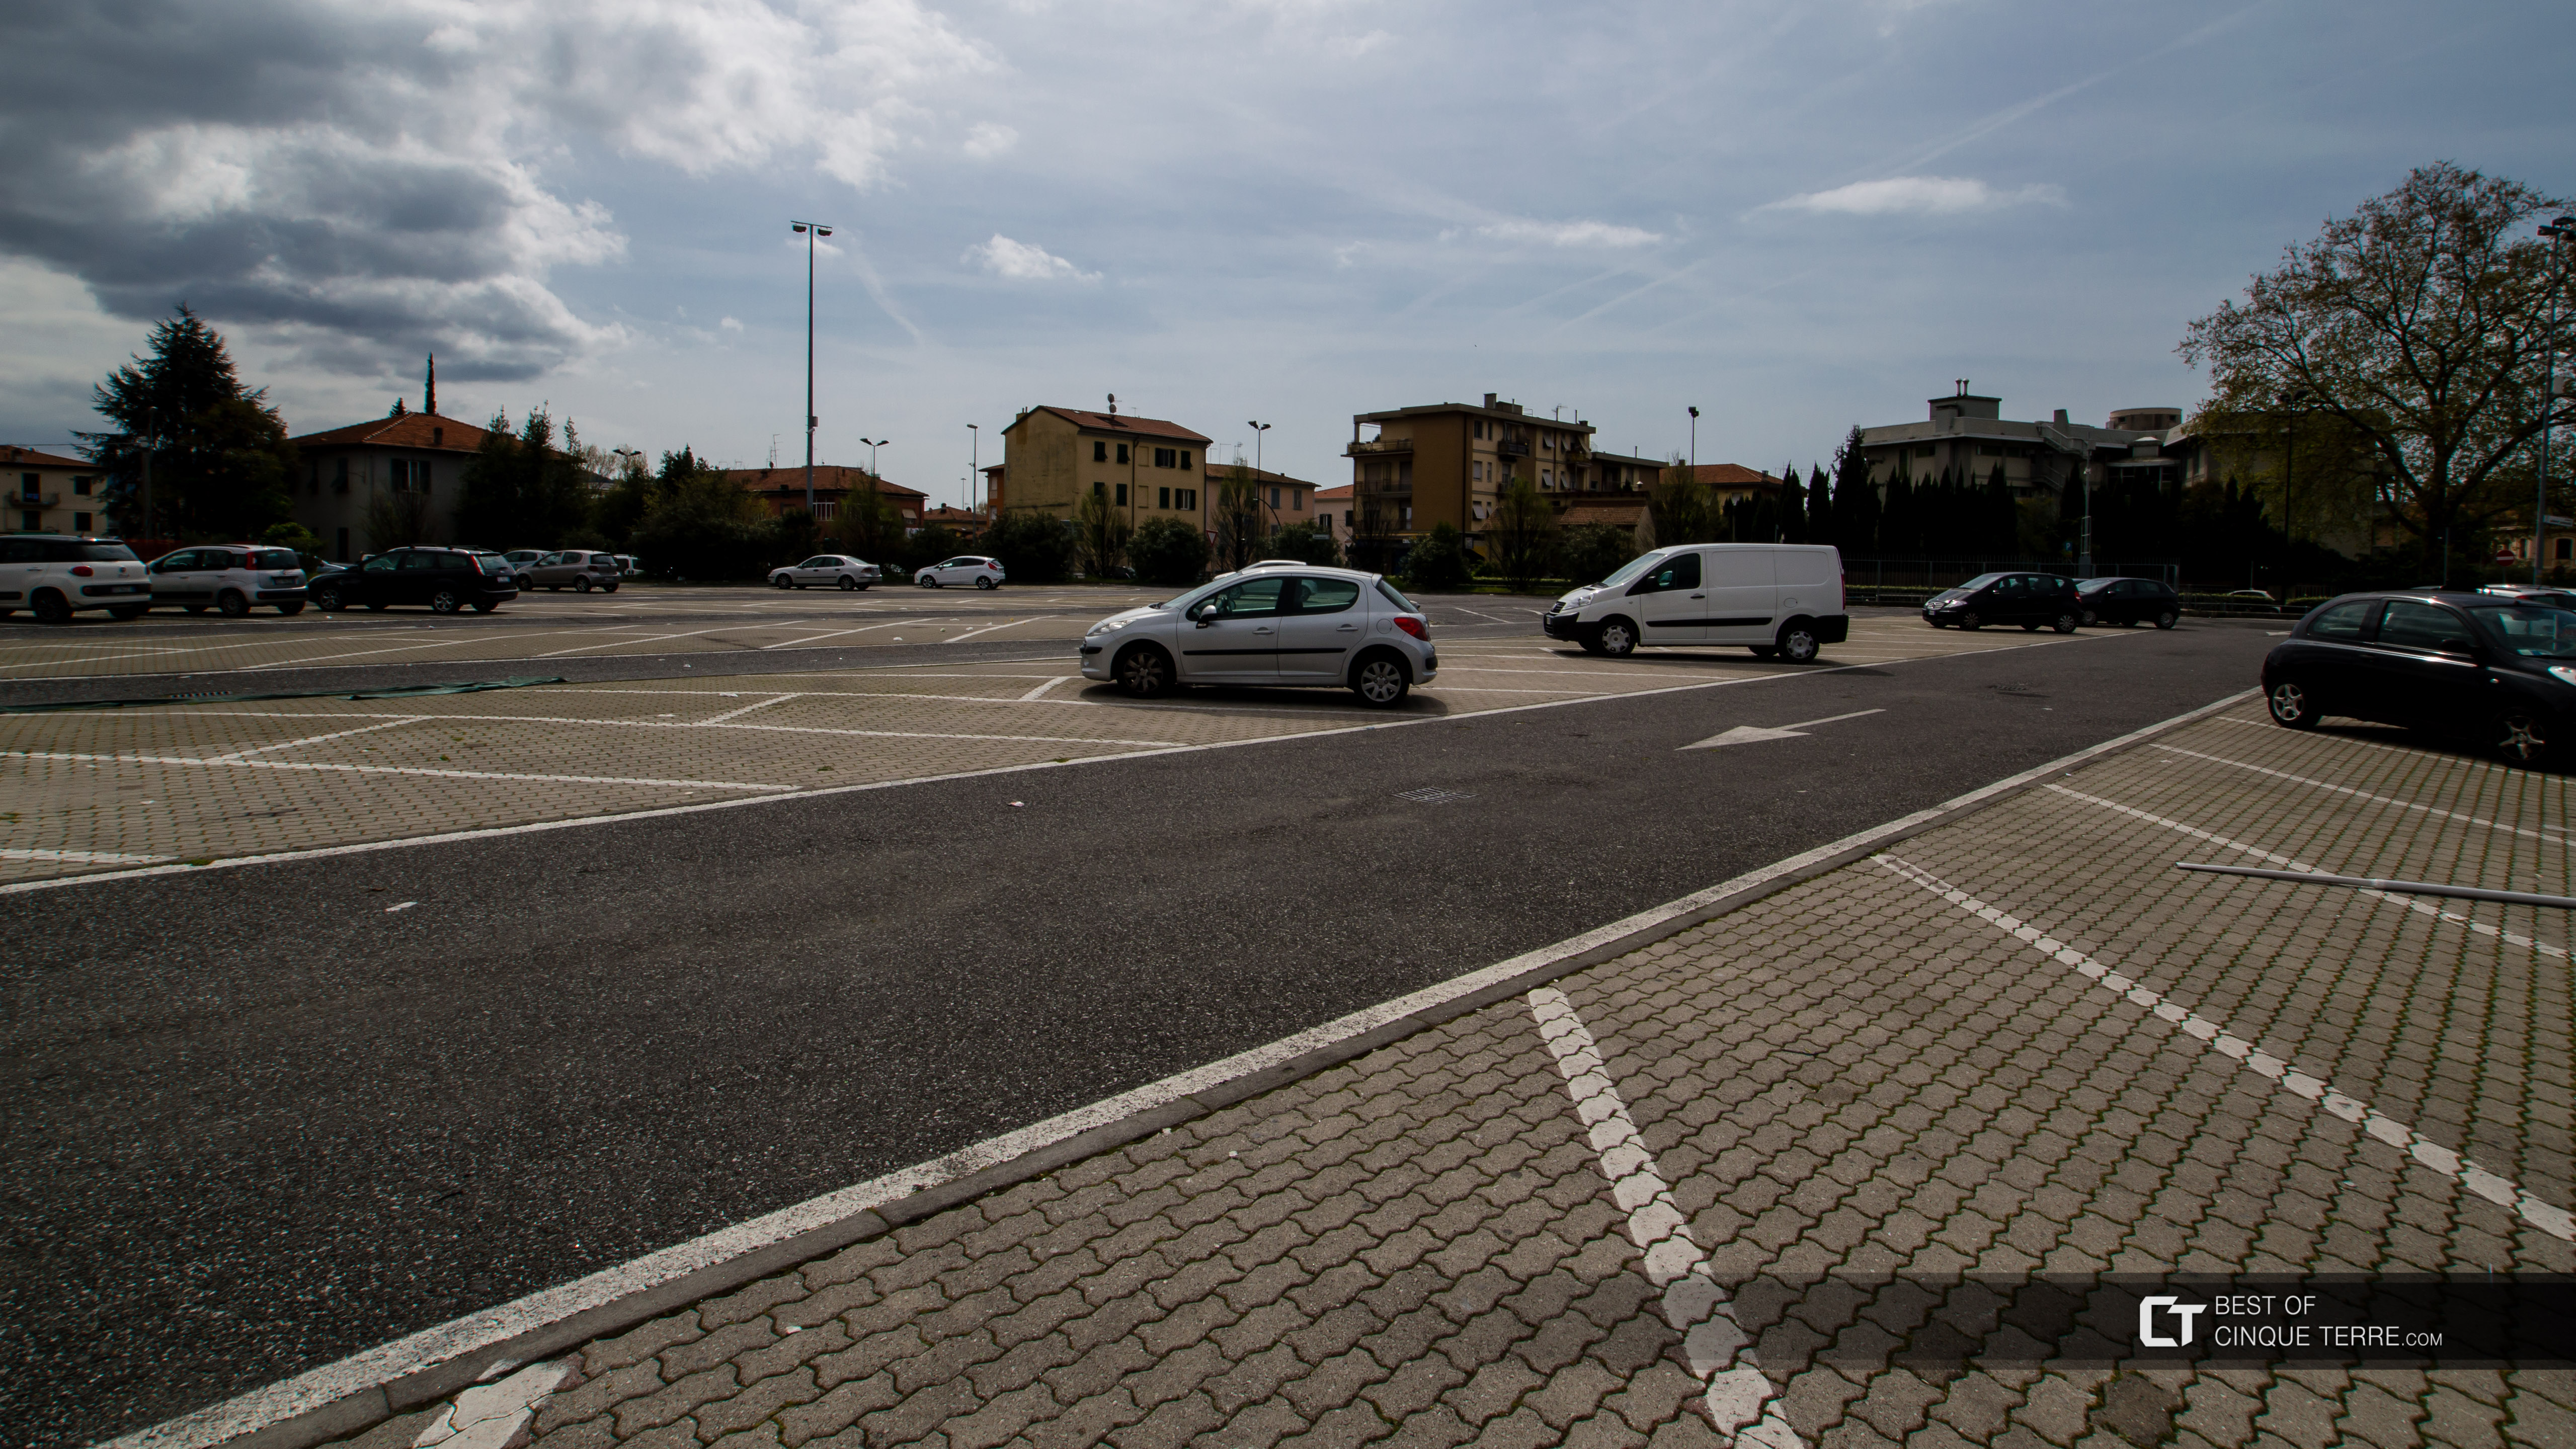 Parking at the Palasport, La Spezia, Italy